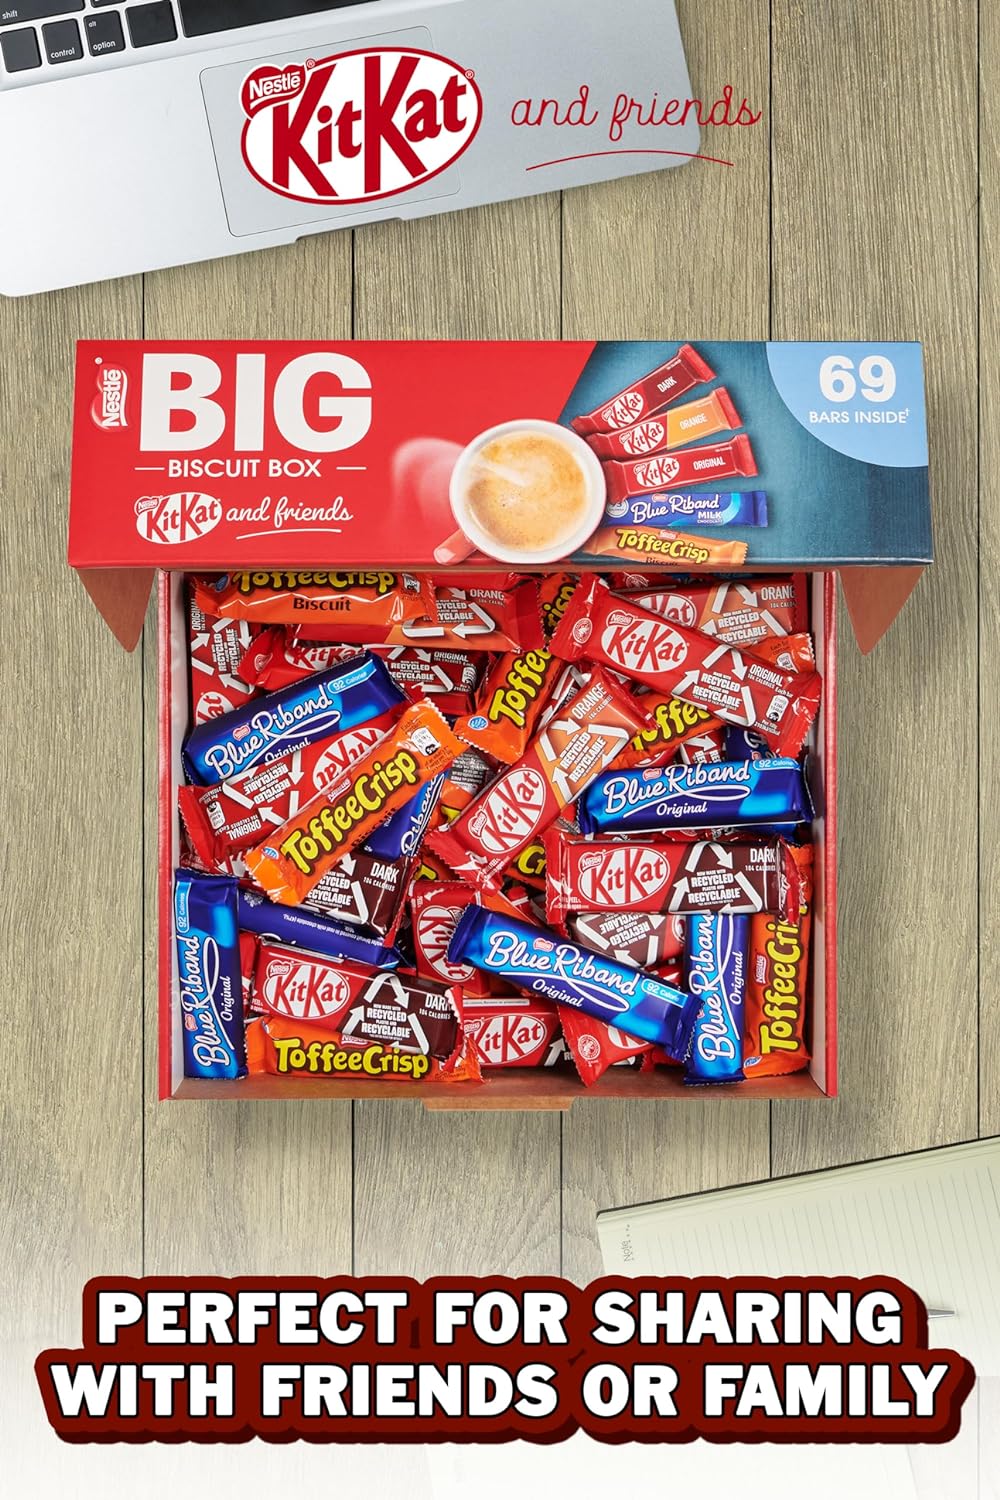 Nestle Big Biscuit Box Kitkat & Friends, 69 Bars